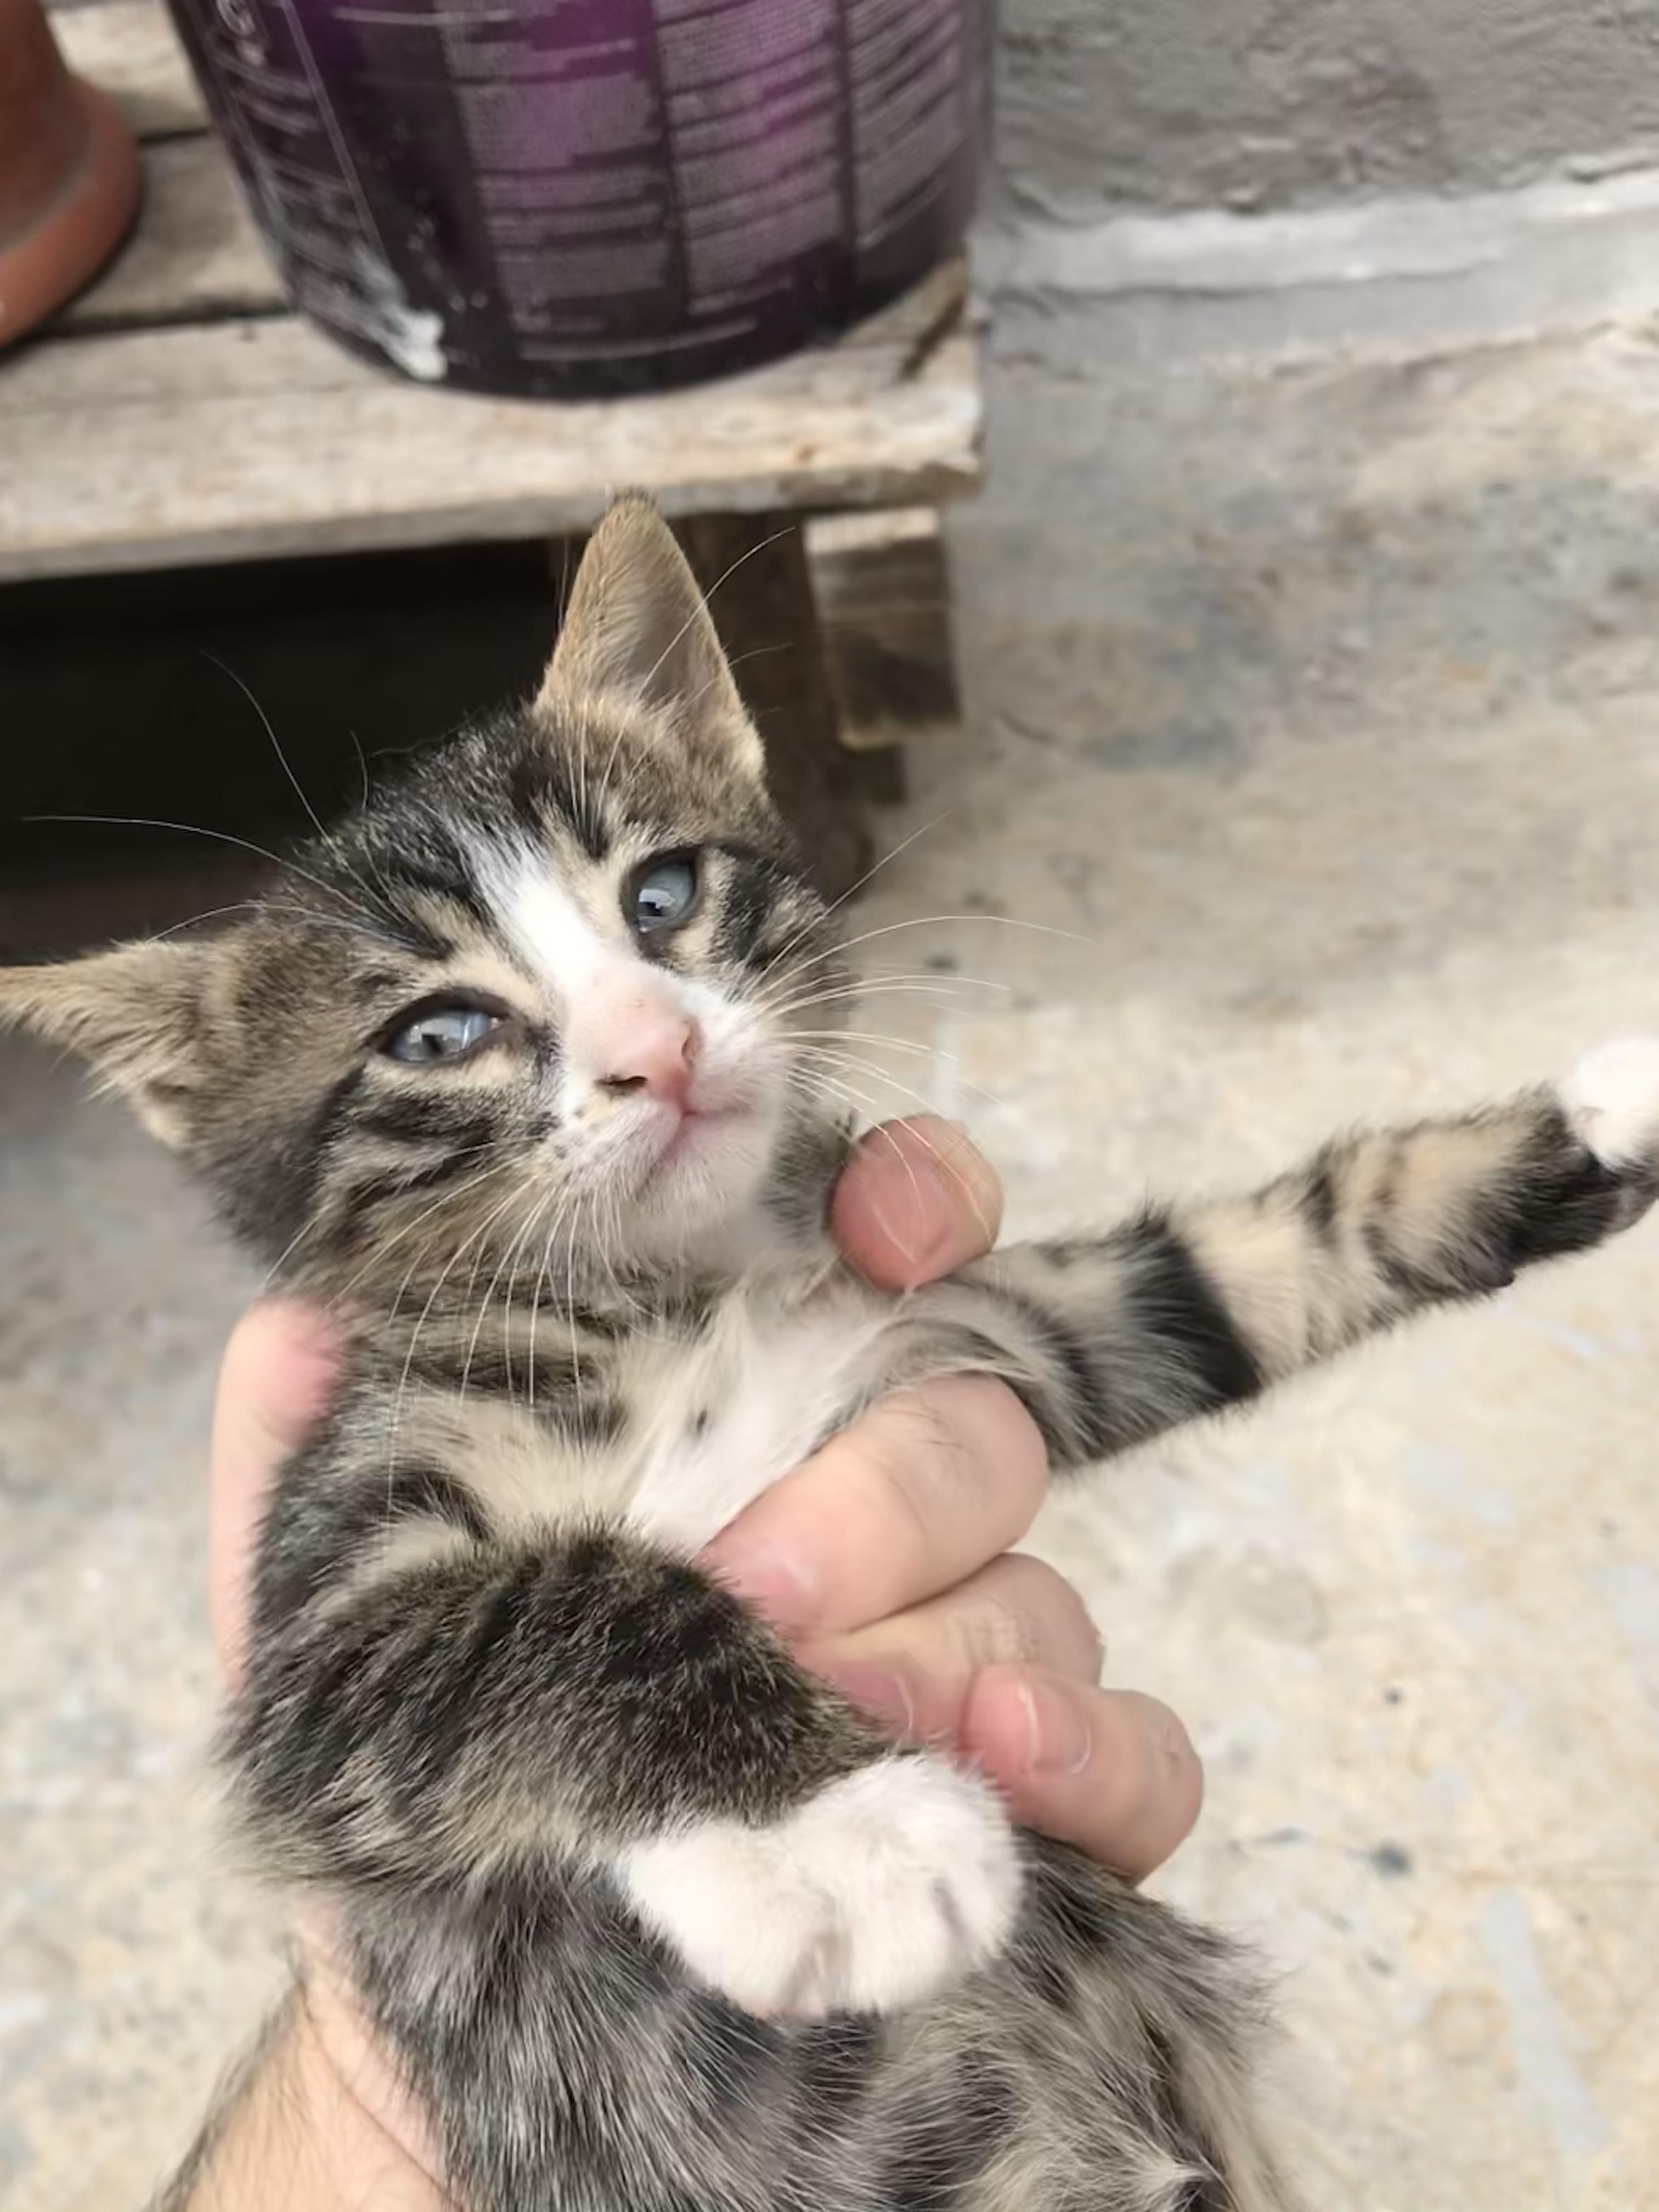 Ev kedimi, Ücretsiz Kedi, İzmir